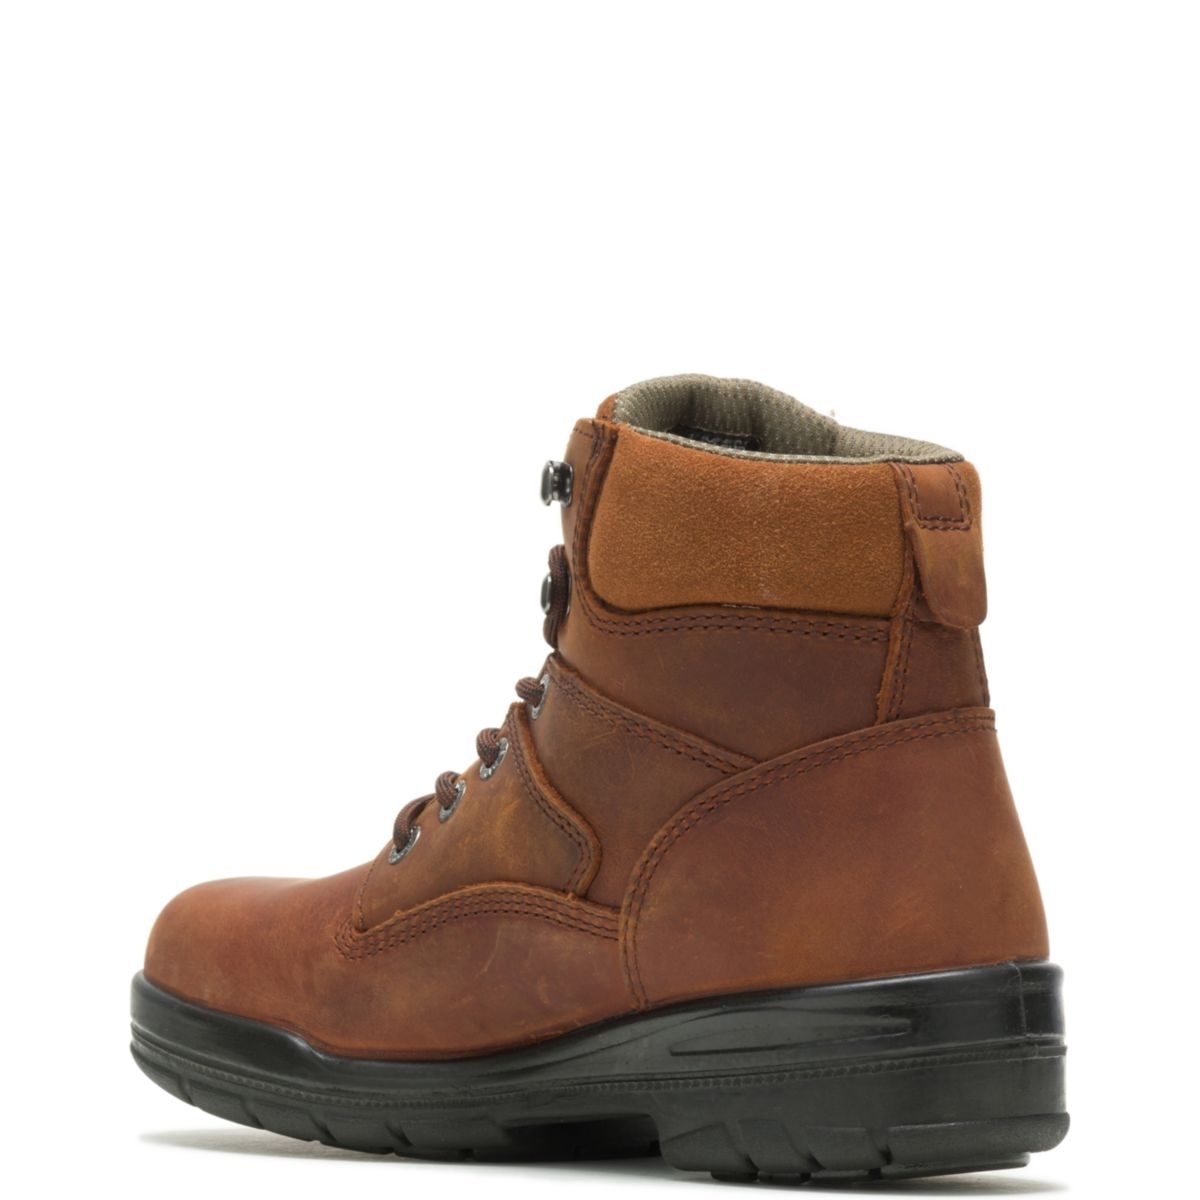 WOLVERINE Men's 6 DuraShocksÂ® Slip Resistant Steel Toe Work Boot Canyon - W02053 BRN/STL - BRN/STL, 8-EW